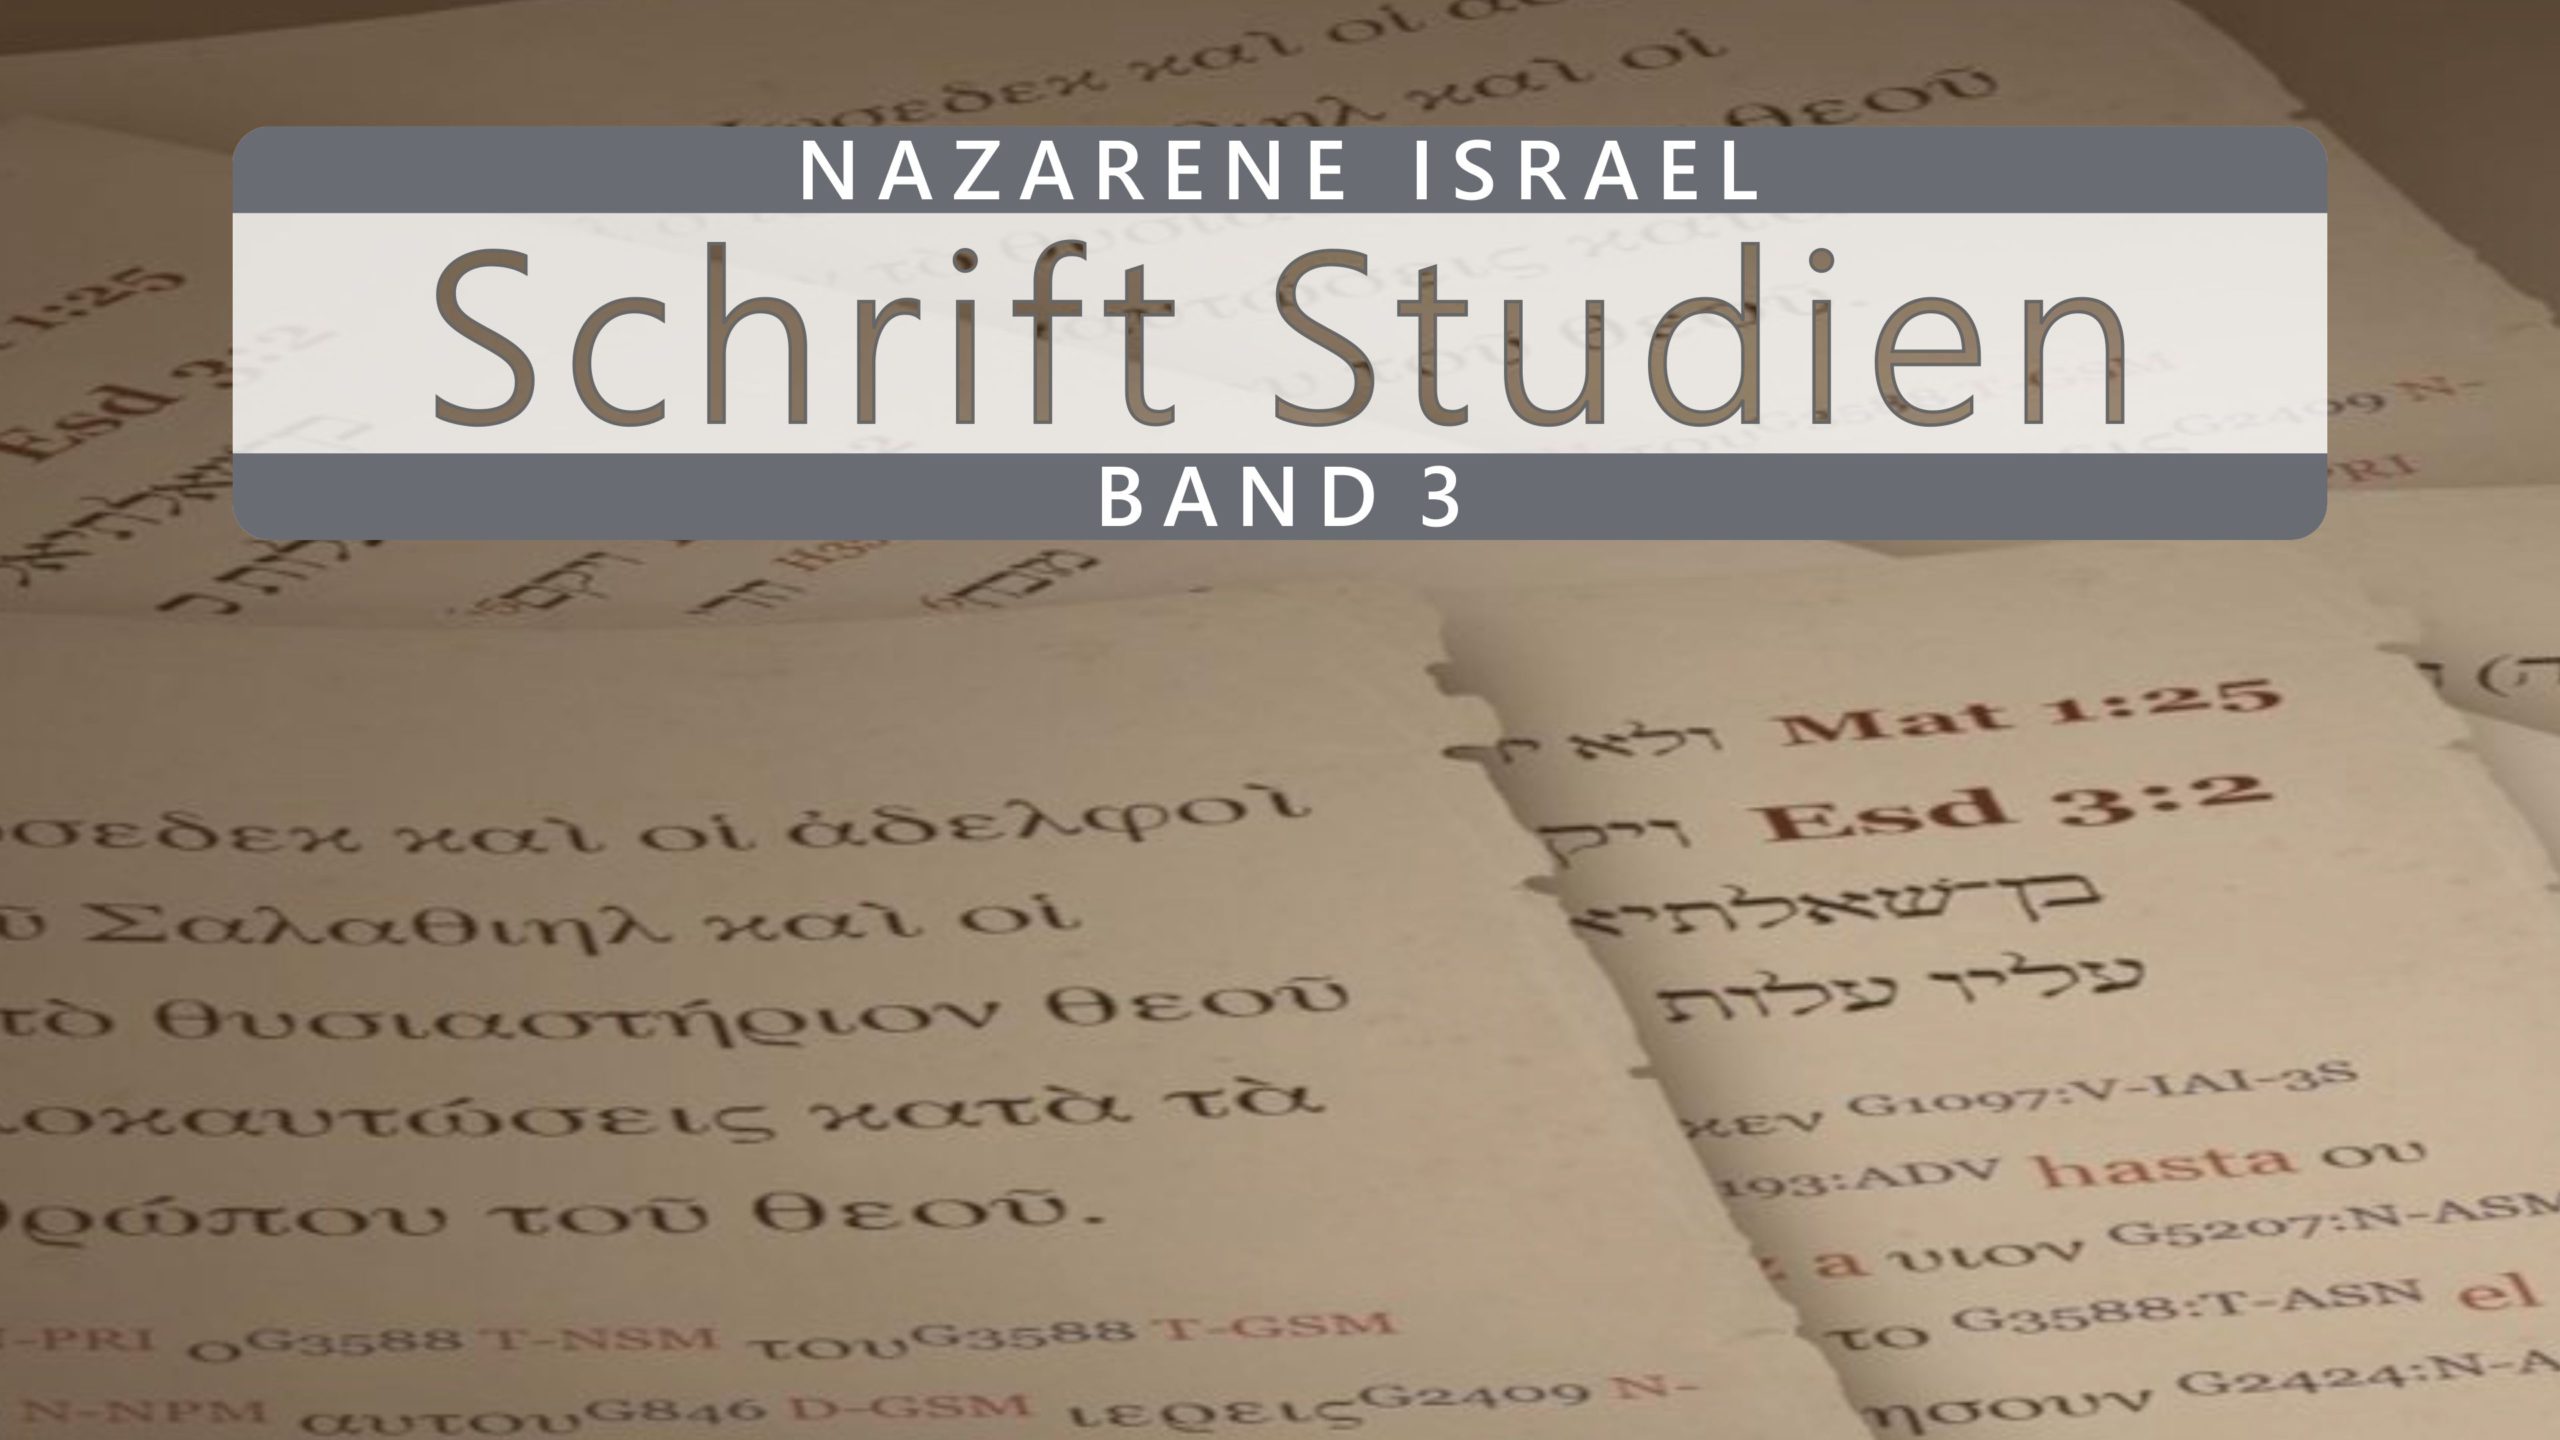 Nazarene Schrift Studien Band 3